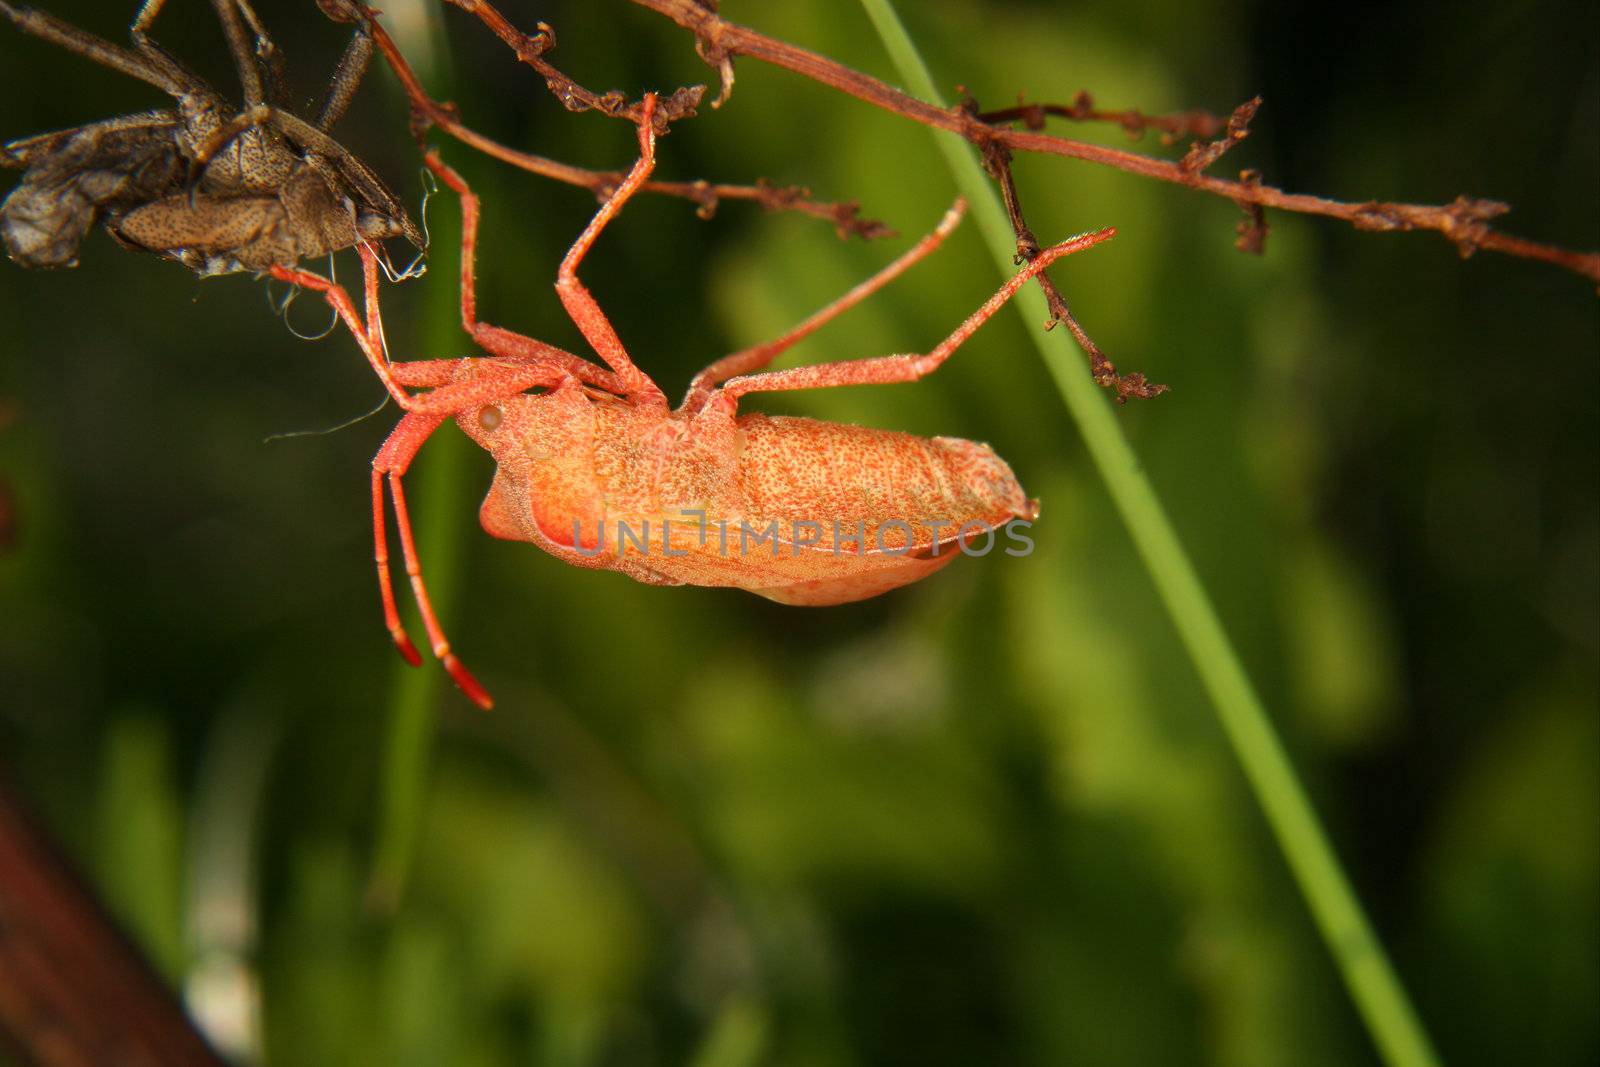 Dock bug (Coreus marginatus) by tdietrich